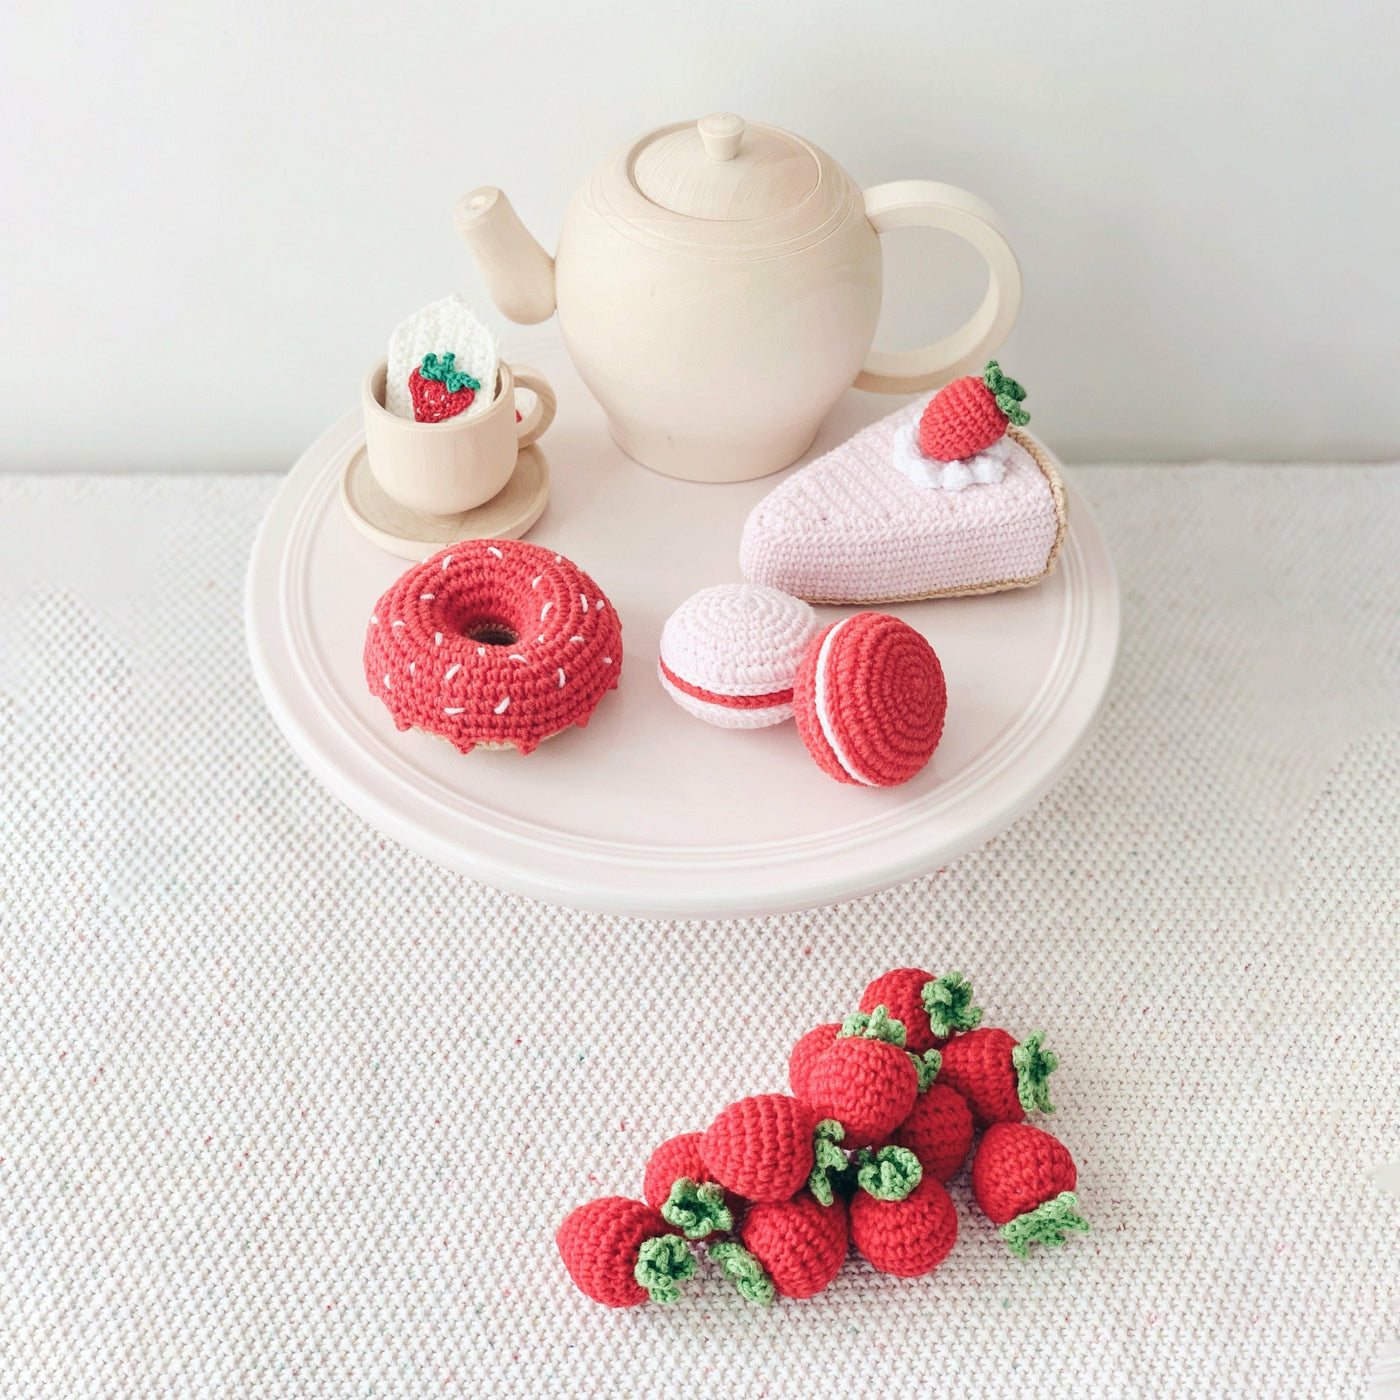 Strawberry Shortcake Tea Party Toys, handmade 4 piece set.